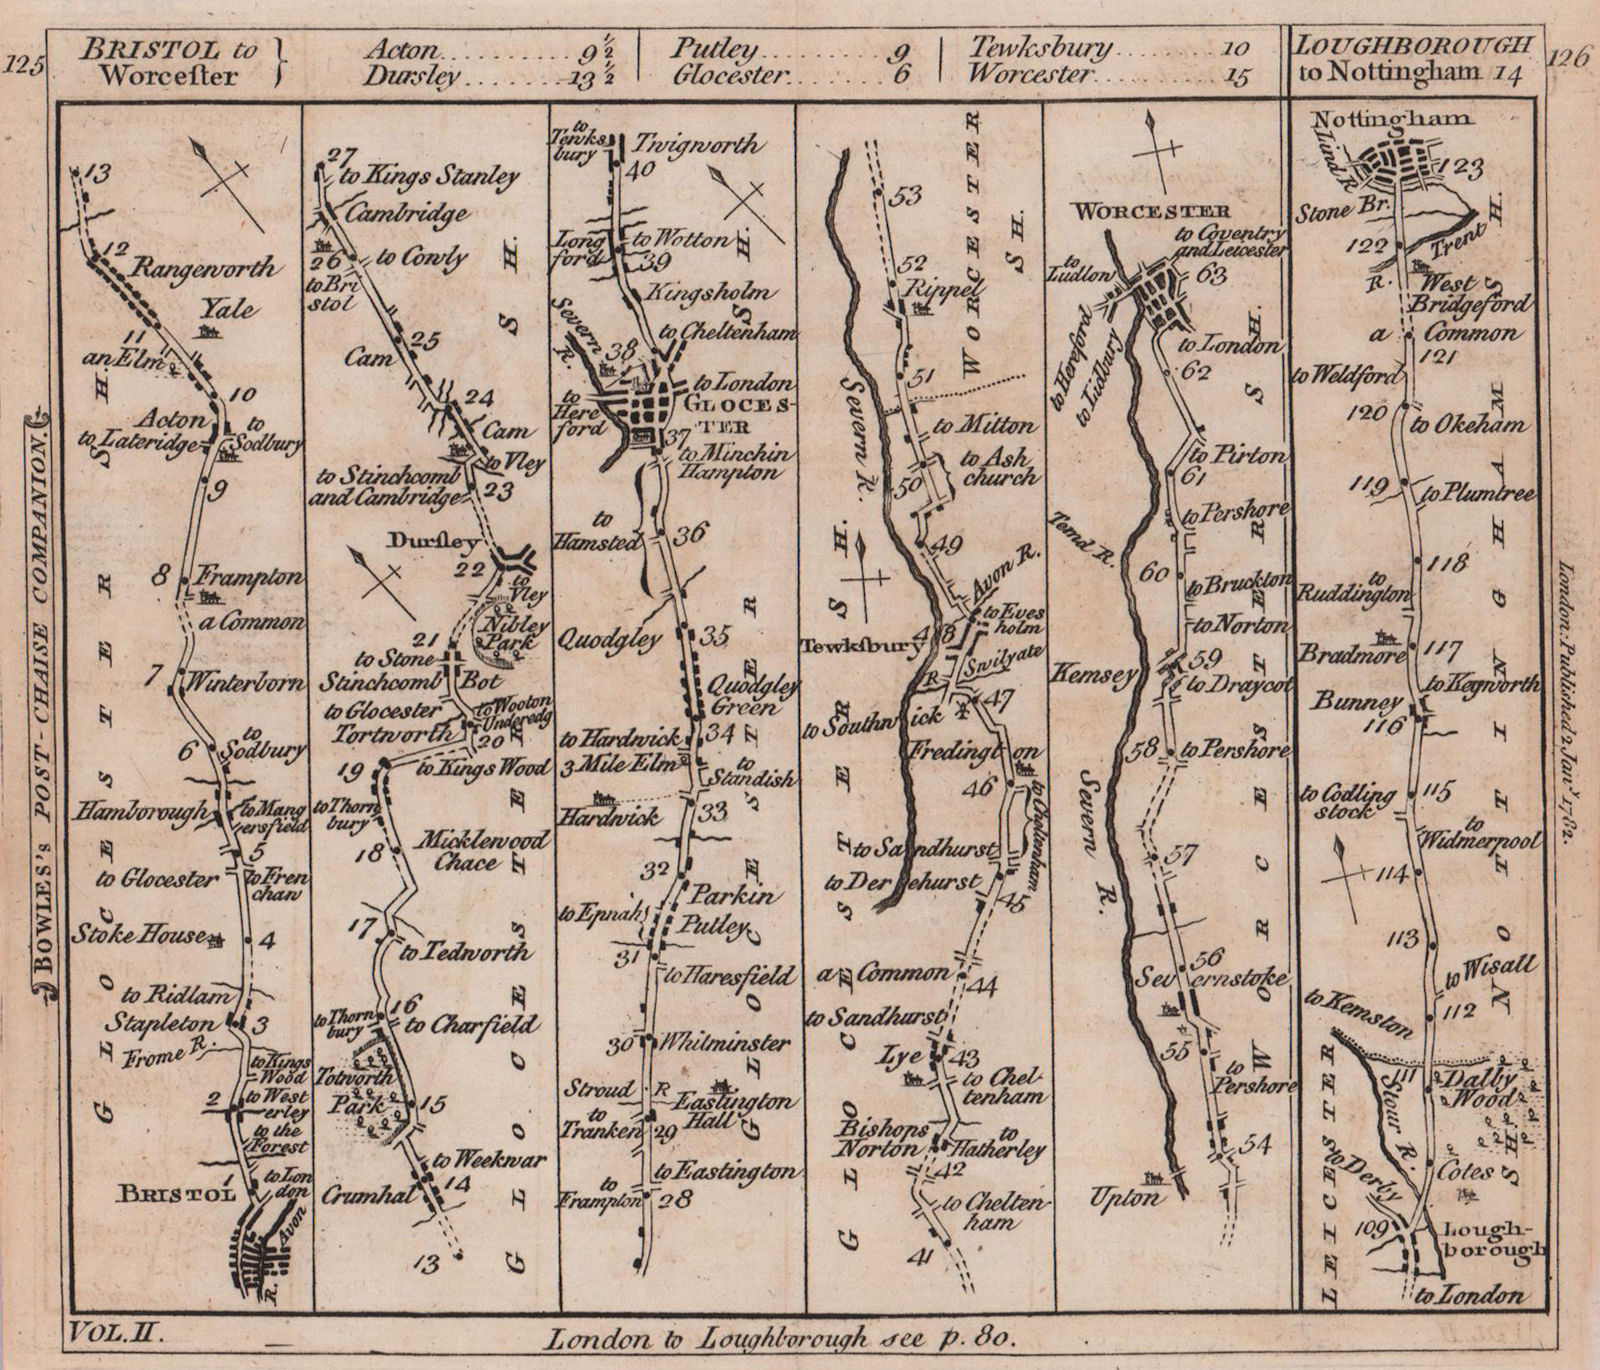 Bristol-Worcester. Loughborough-Nottingham road strip map. BOWLES 1782 old